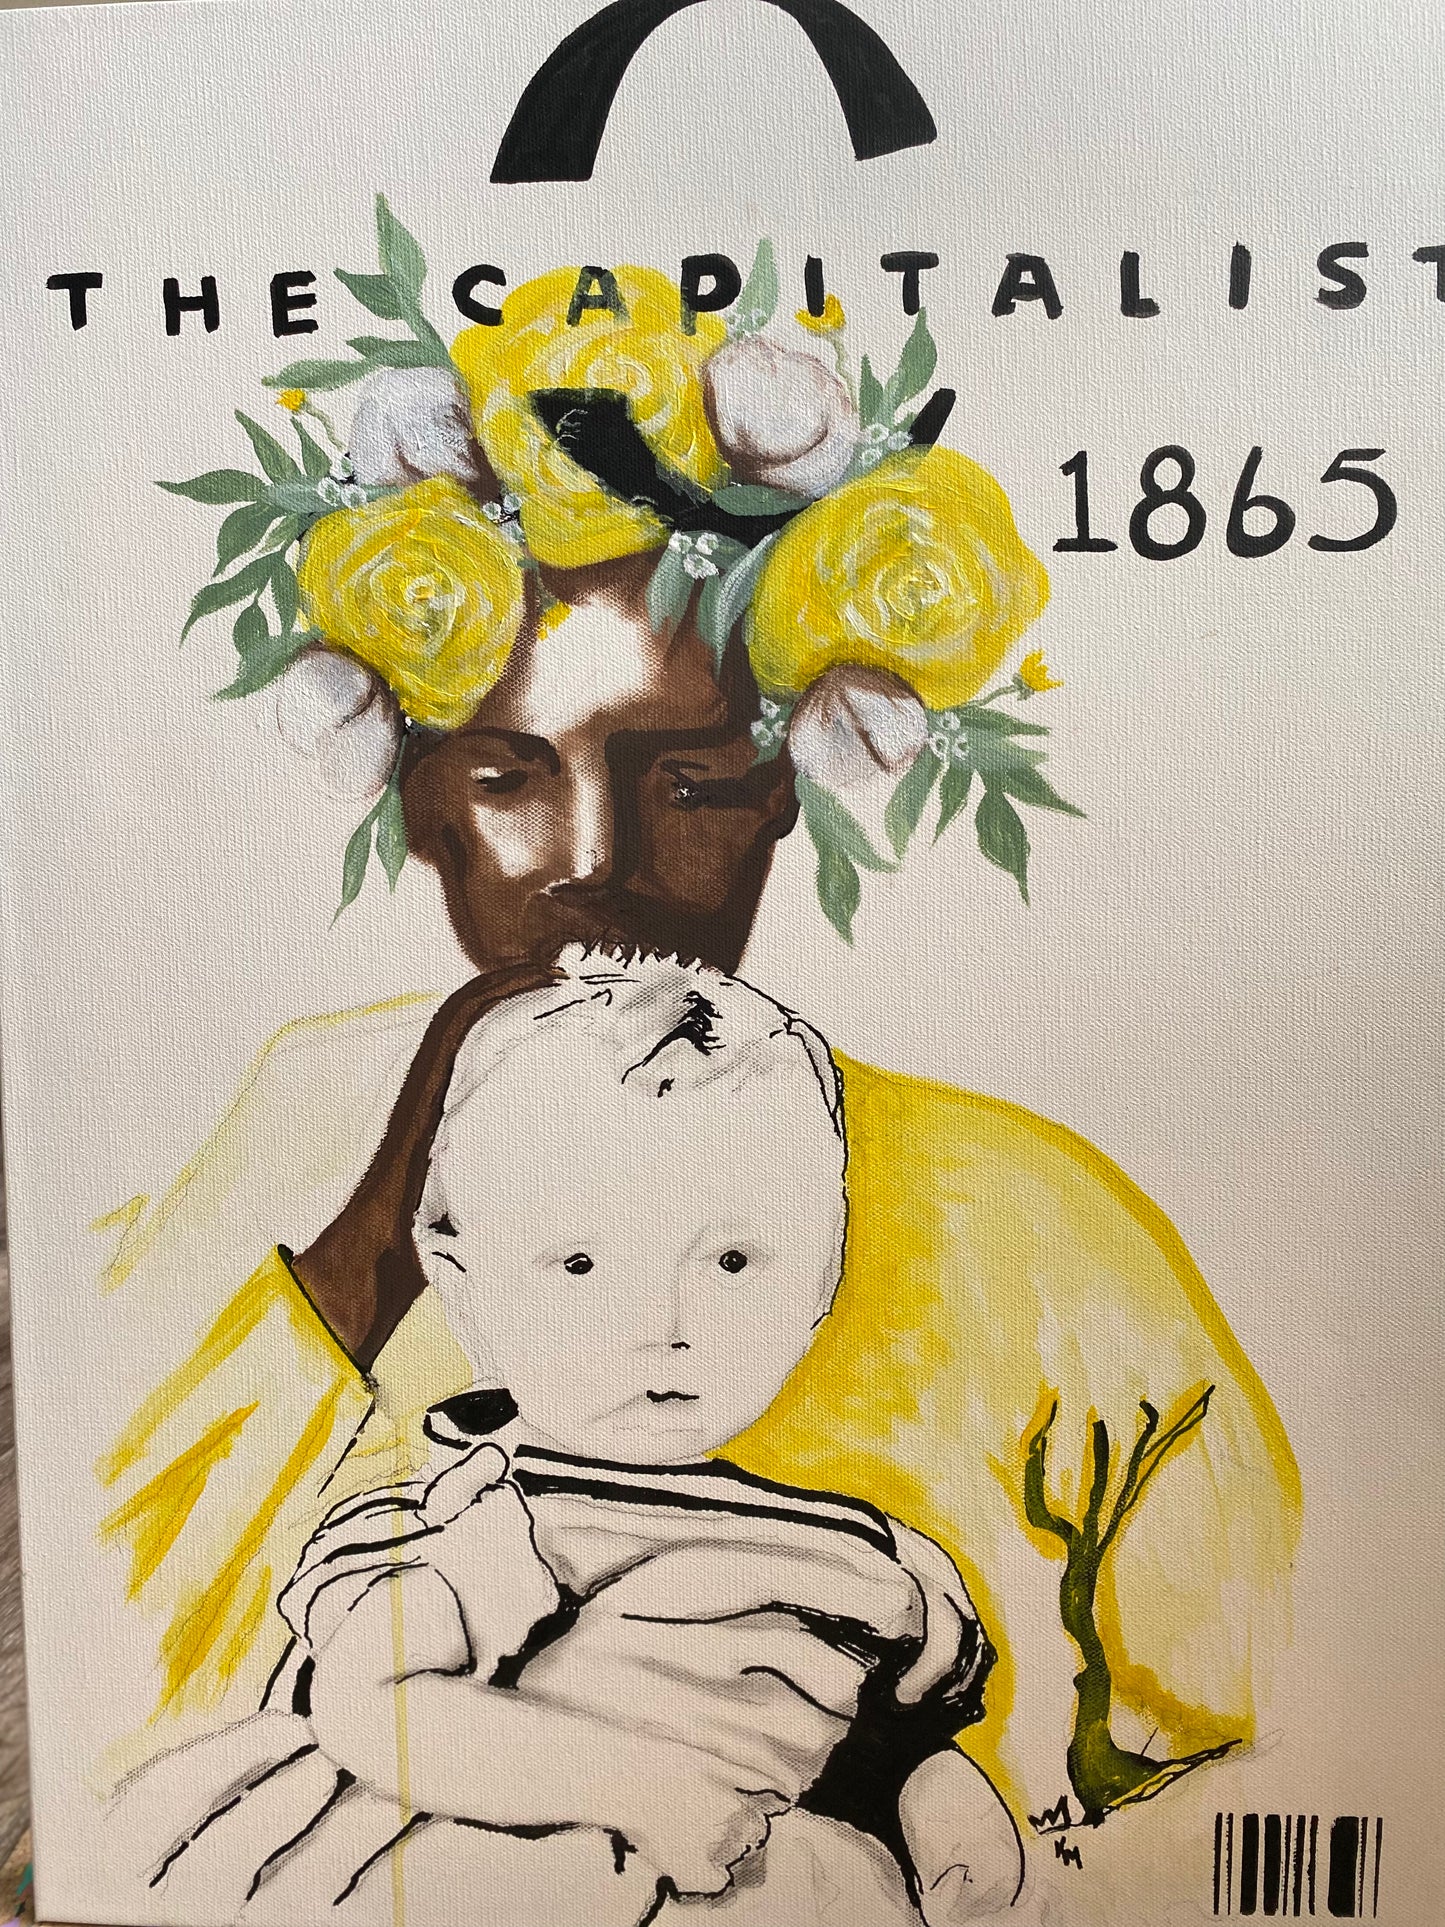 The Capitalist